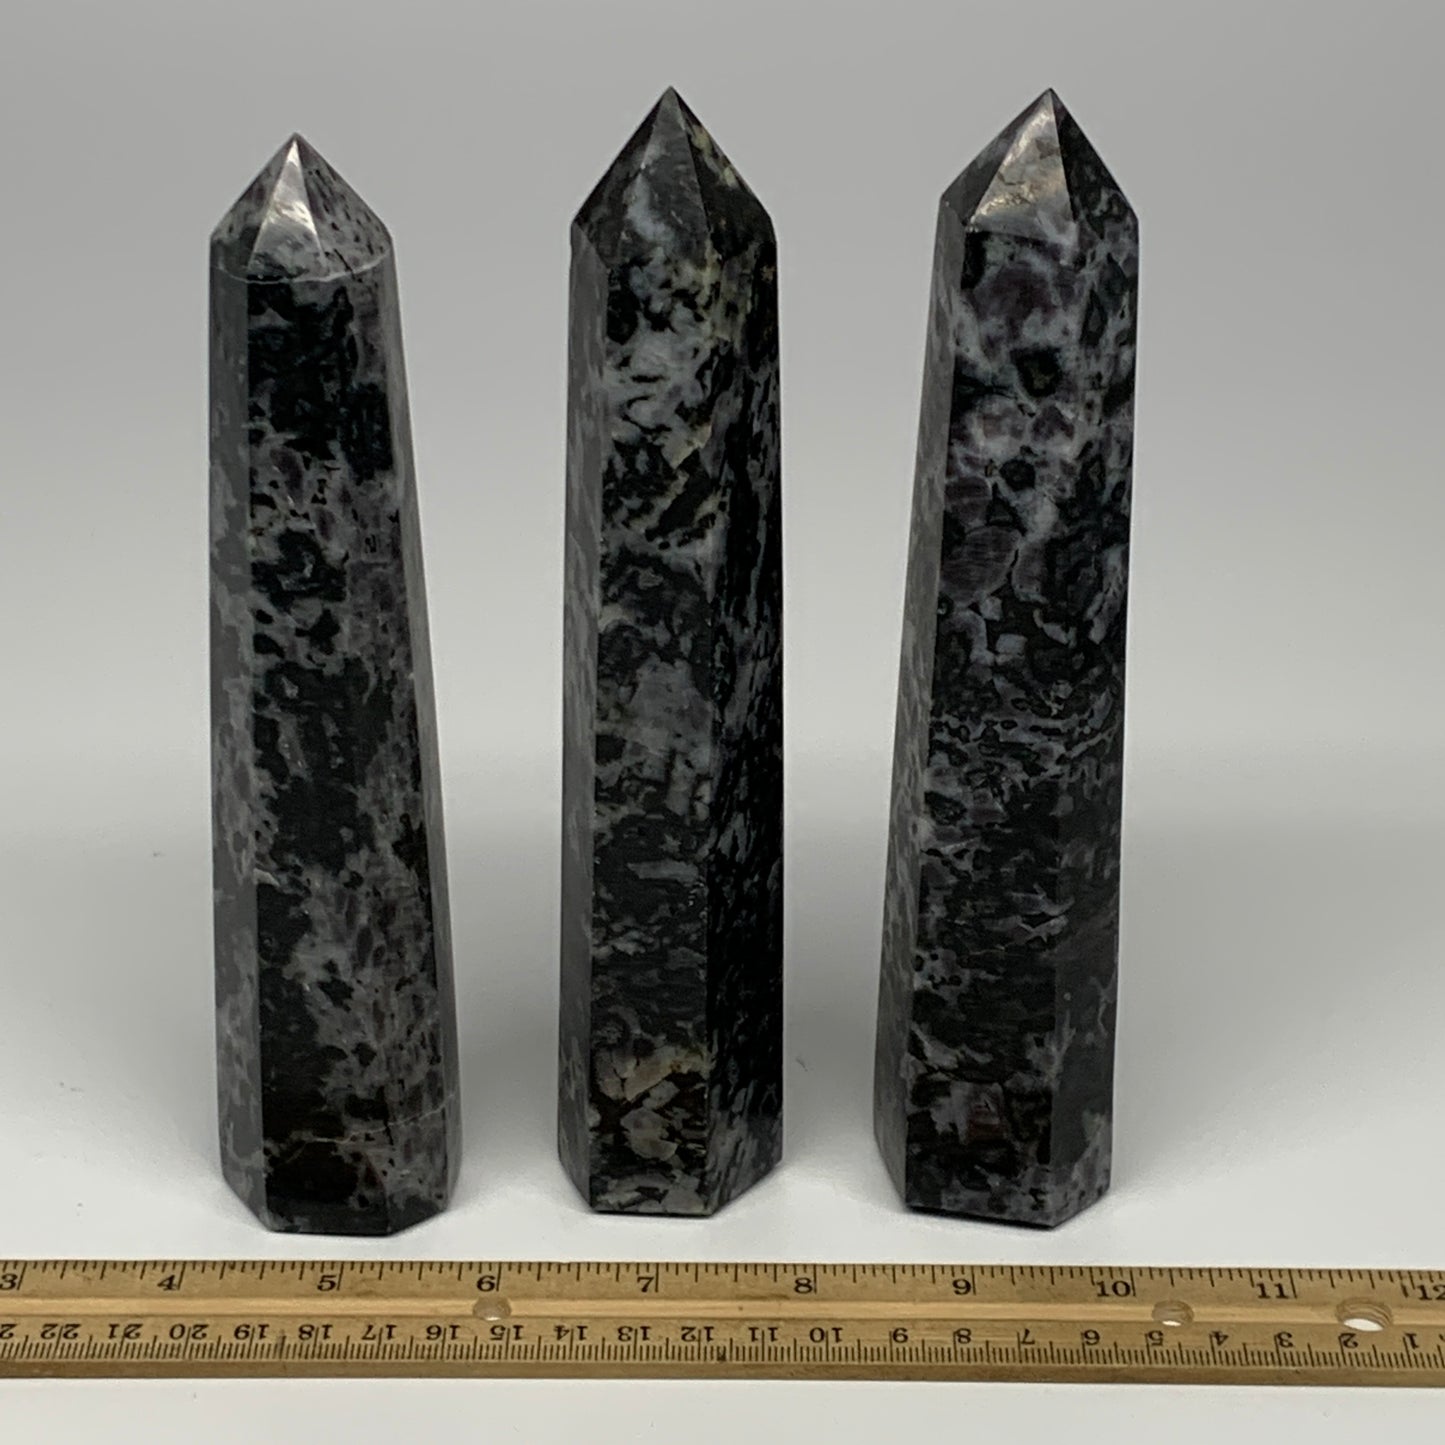 1295 grams, 7.4" - 7.6", 3 pcs, Indigo Gabro Merlinte Towers/Obelisks, B21443